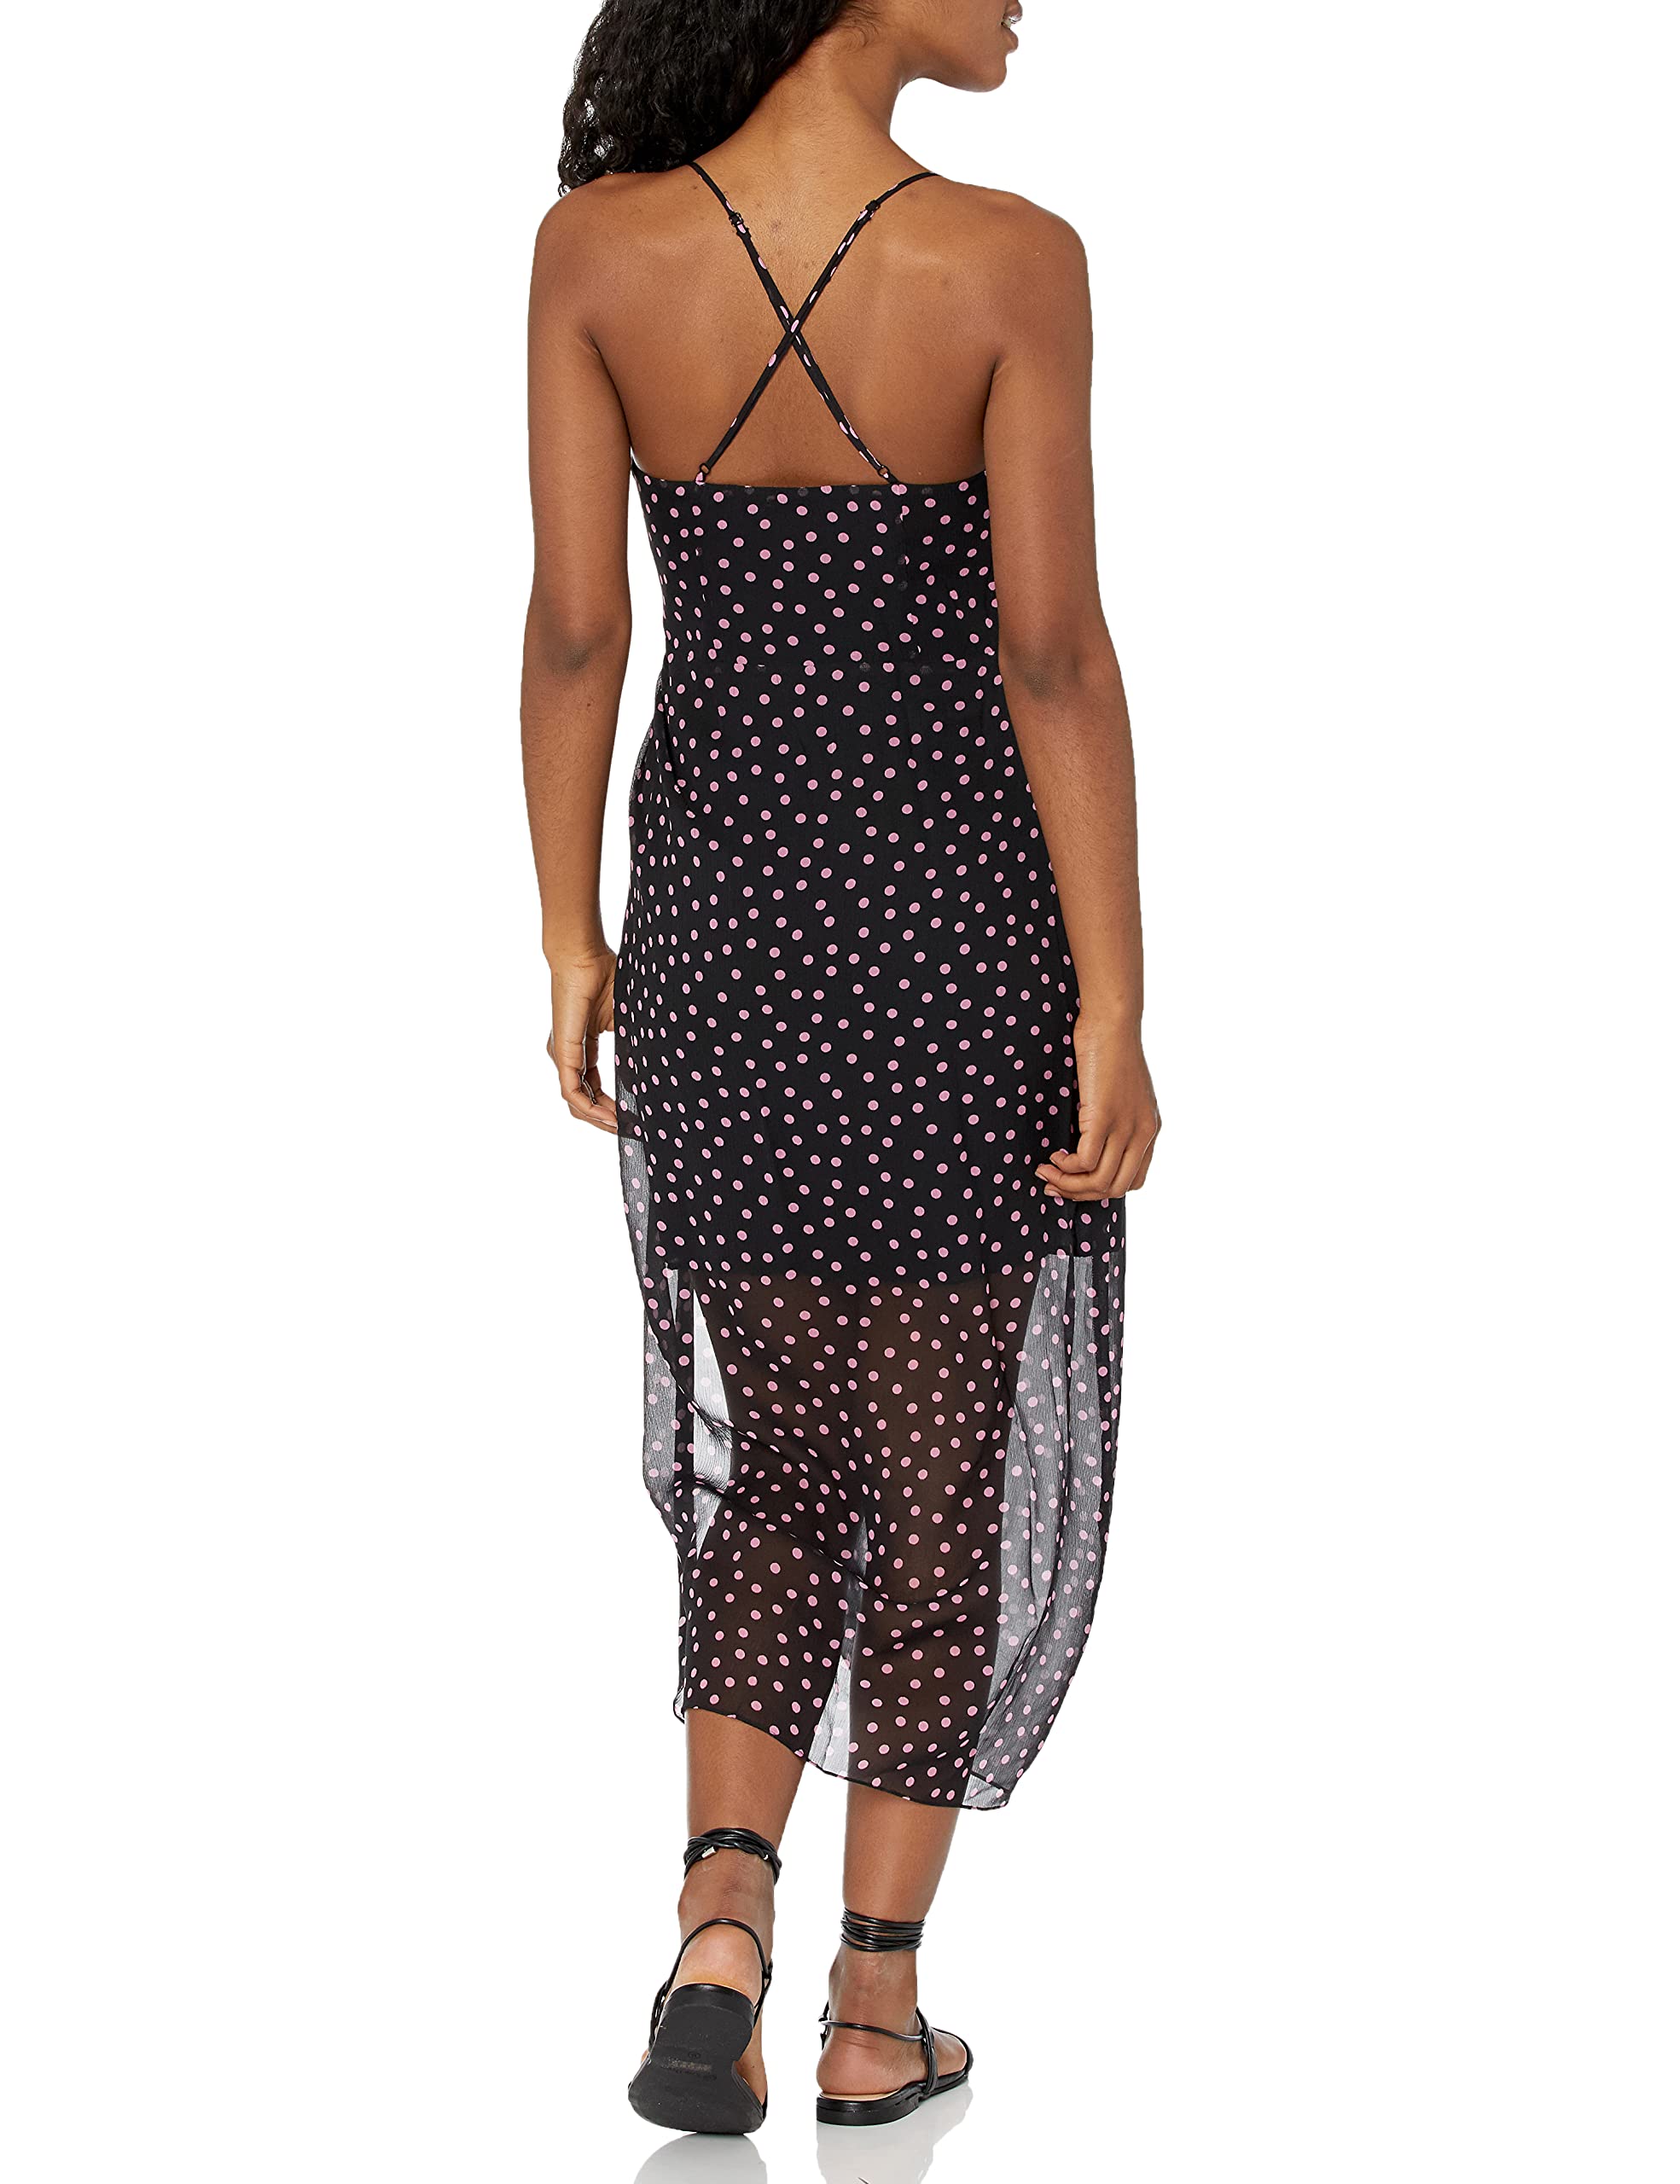 The Kooples Women's Maxi Dress in a Polka Dot Print